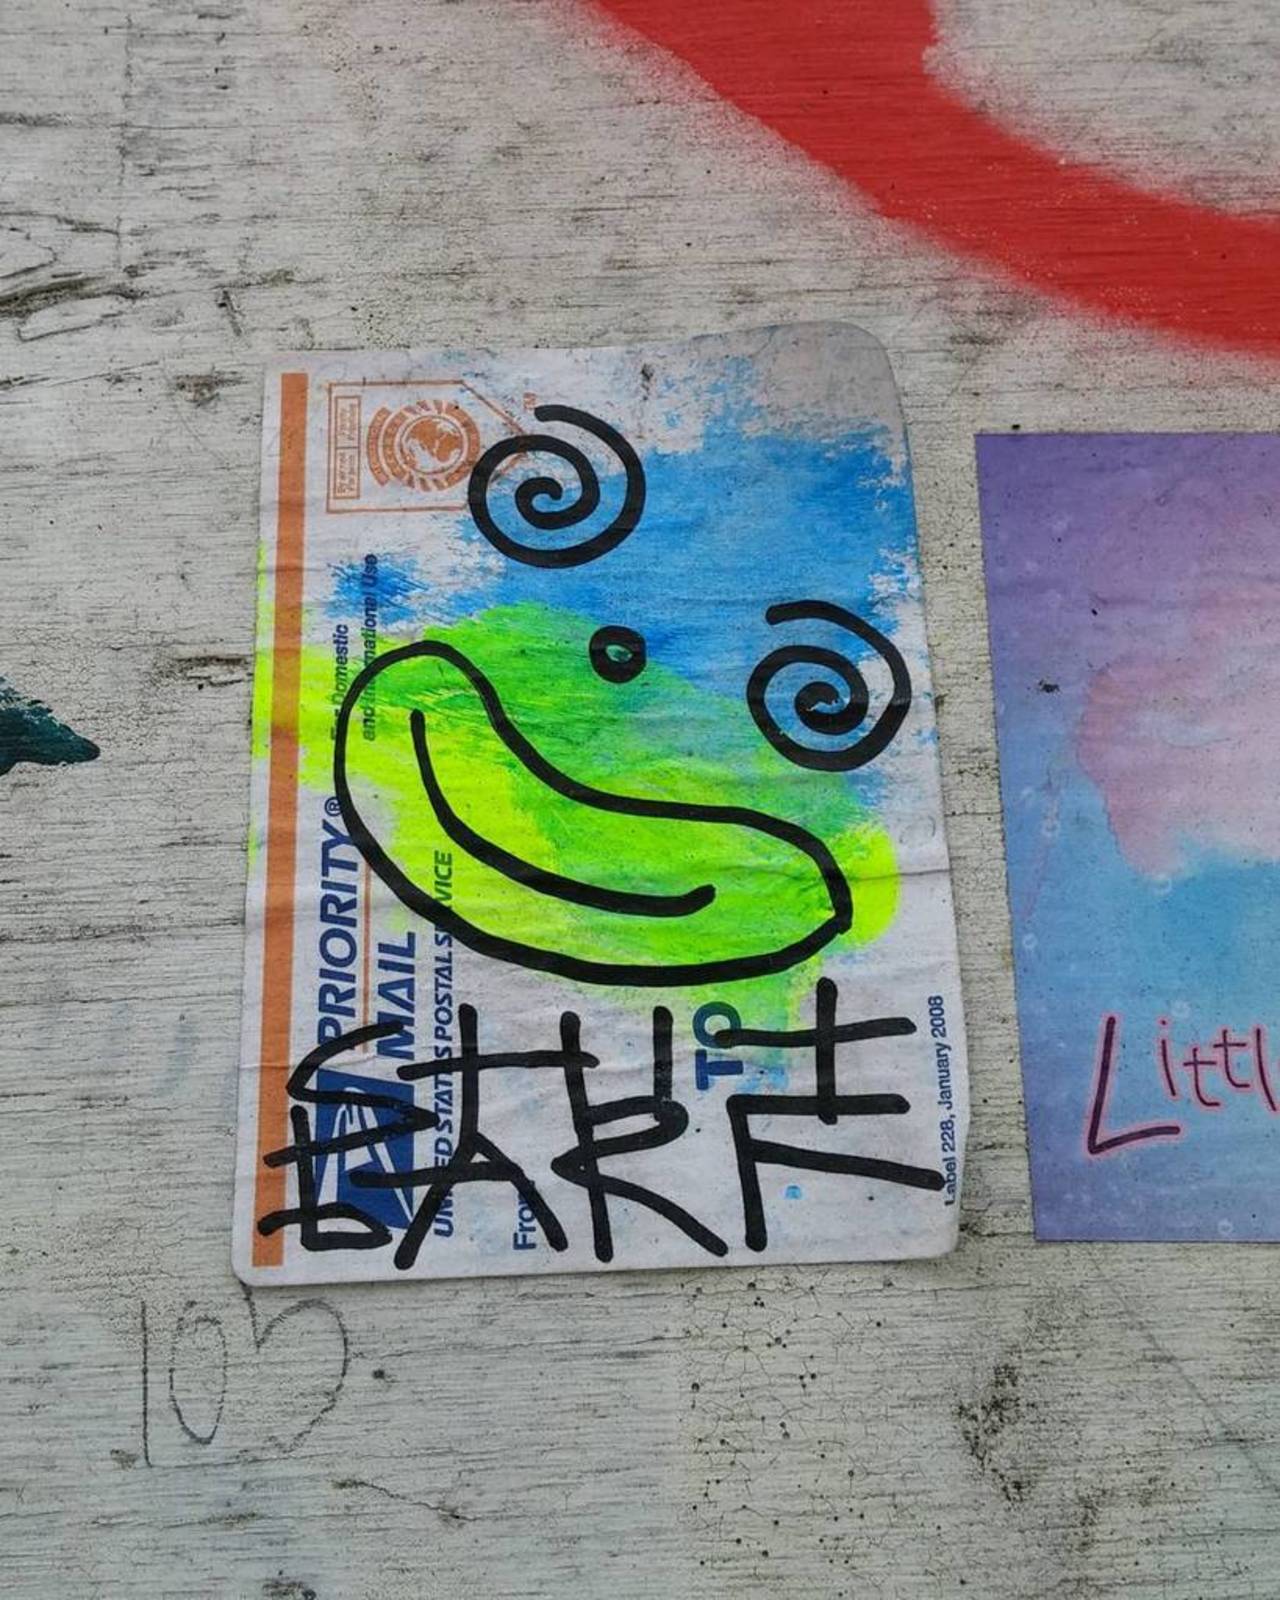 #seattle #streetart #graffiti #art #nofilter #urban #art #urbanart #artsy #instagraffiti https://t.co/4SGulf5wdX